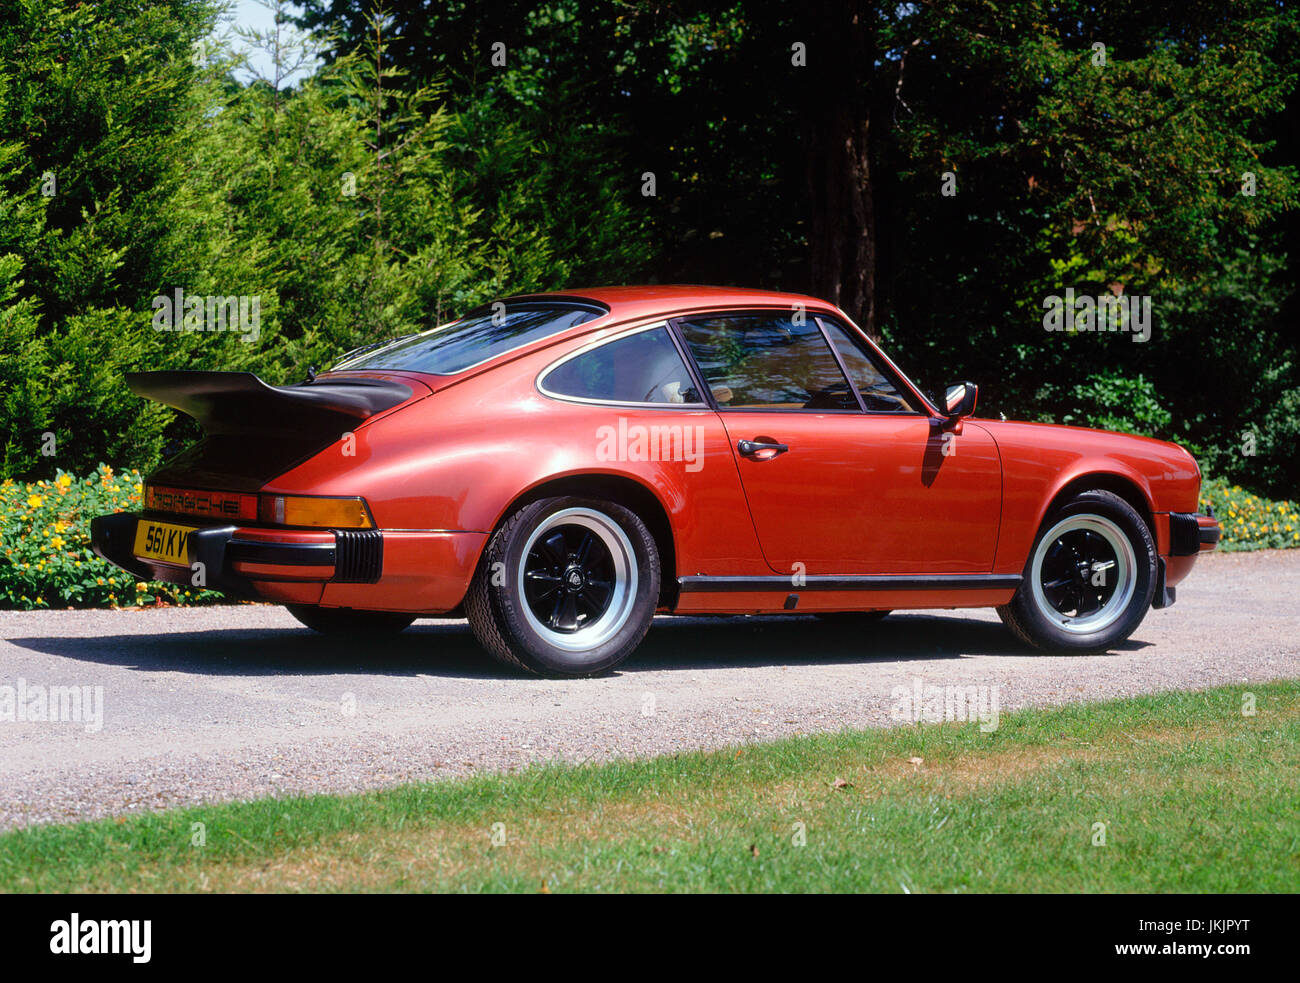 1977 Porsche 911 carrera  Stock Photo - Alamy